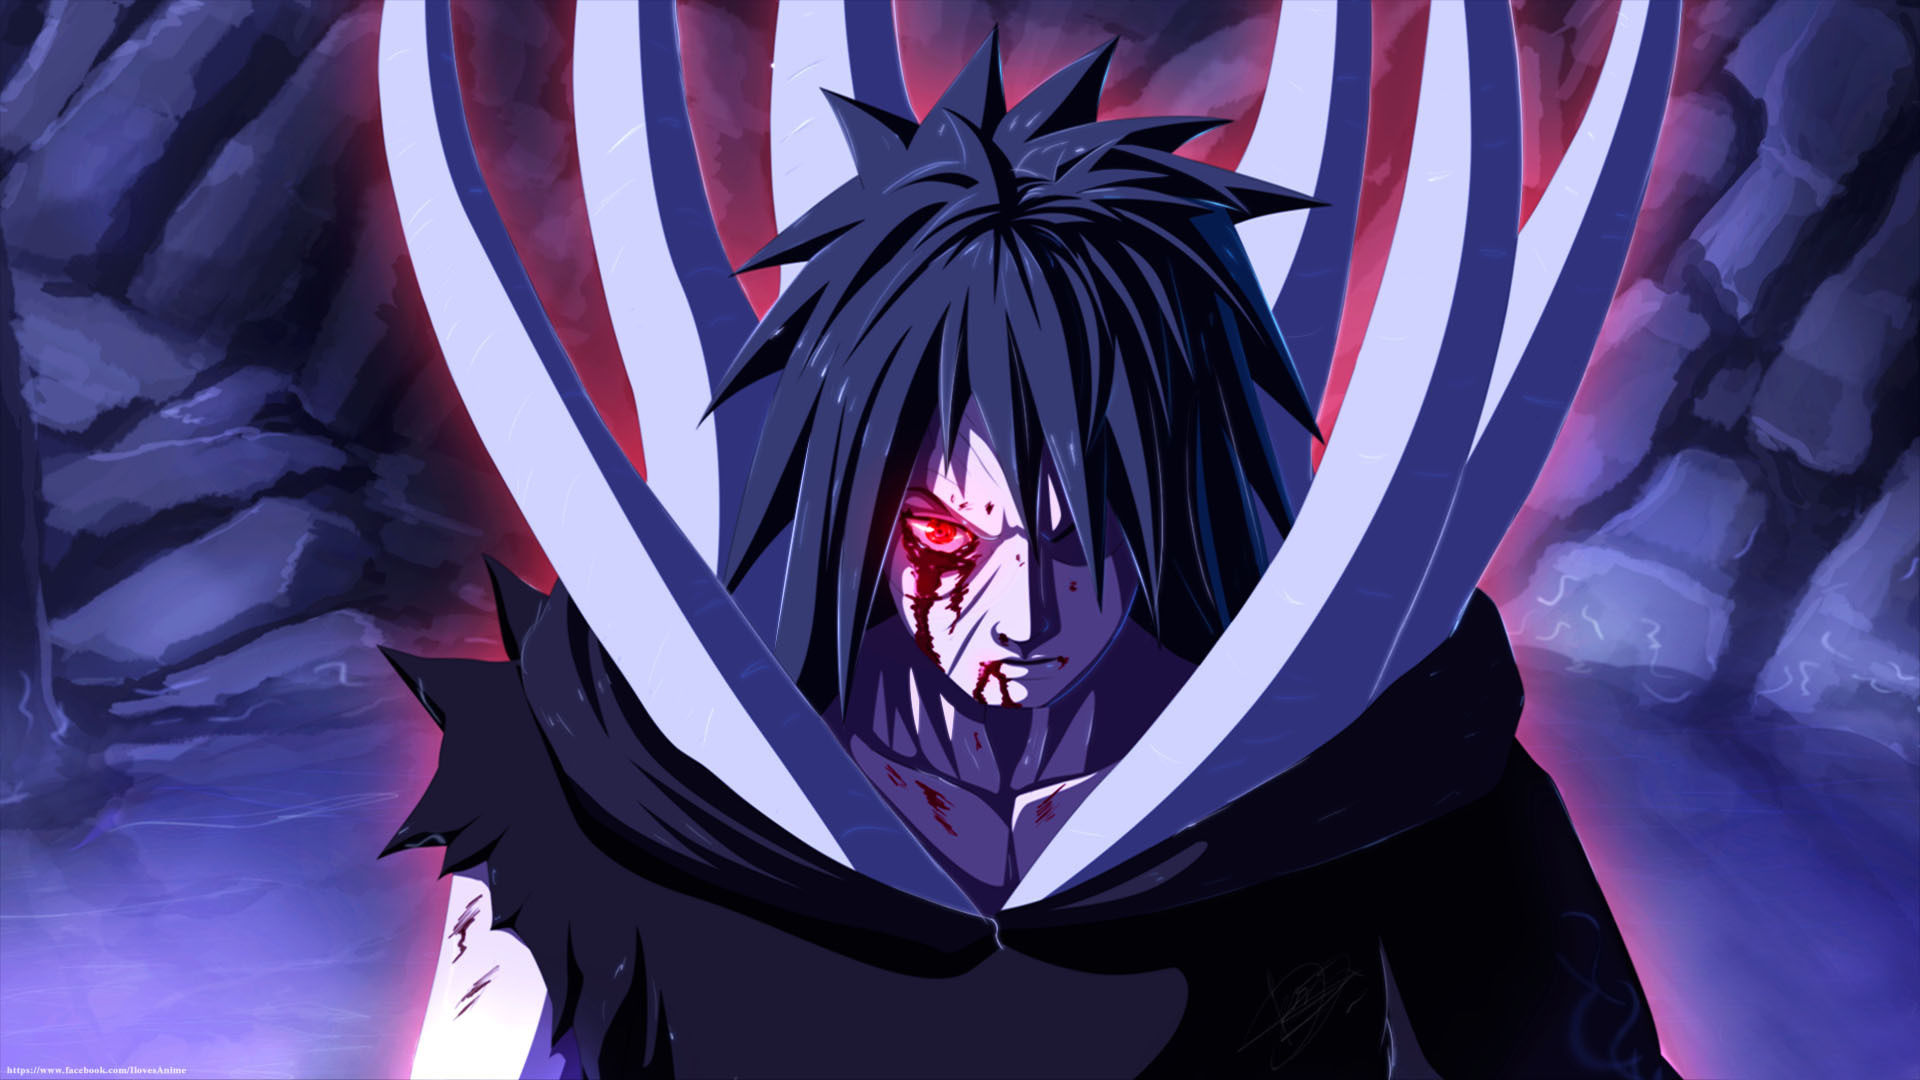 Akatsuki Naruto Guy Art Blood Uchiha Obito Anime Wallpaper Background